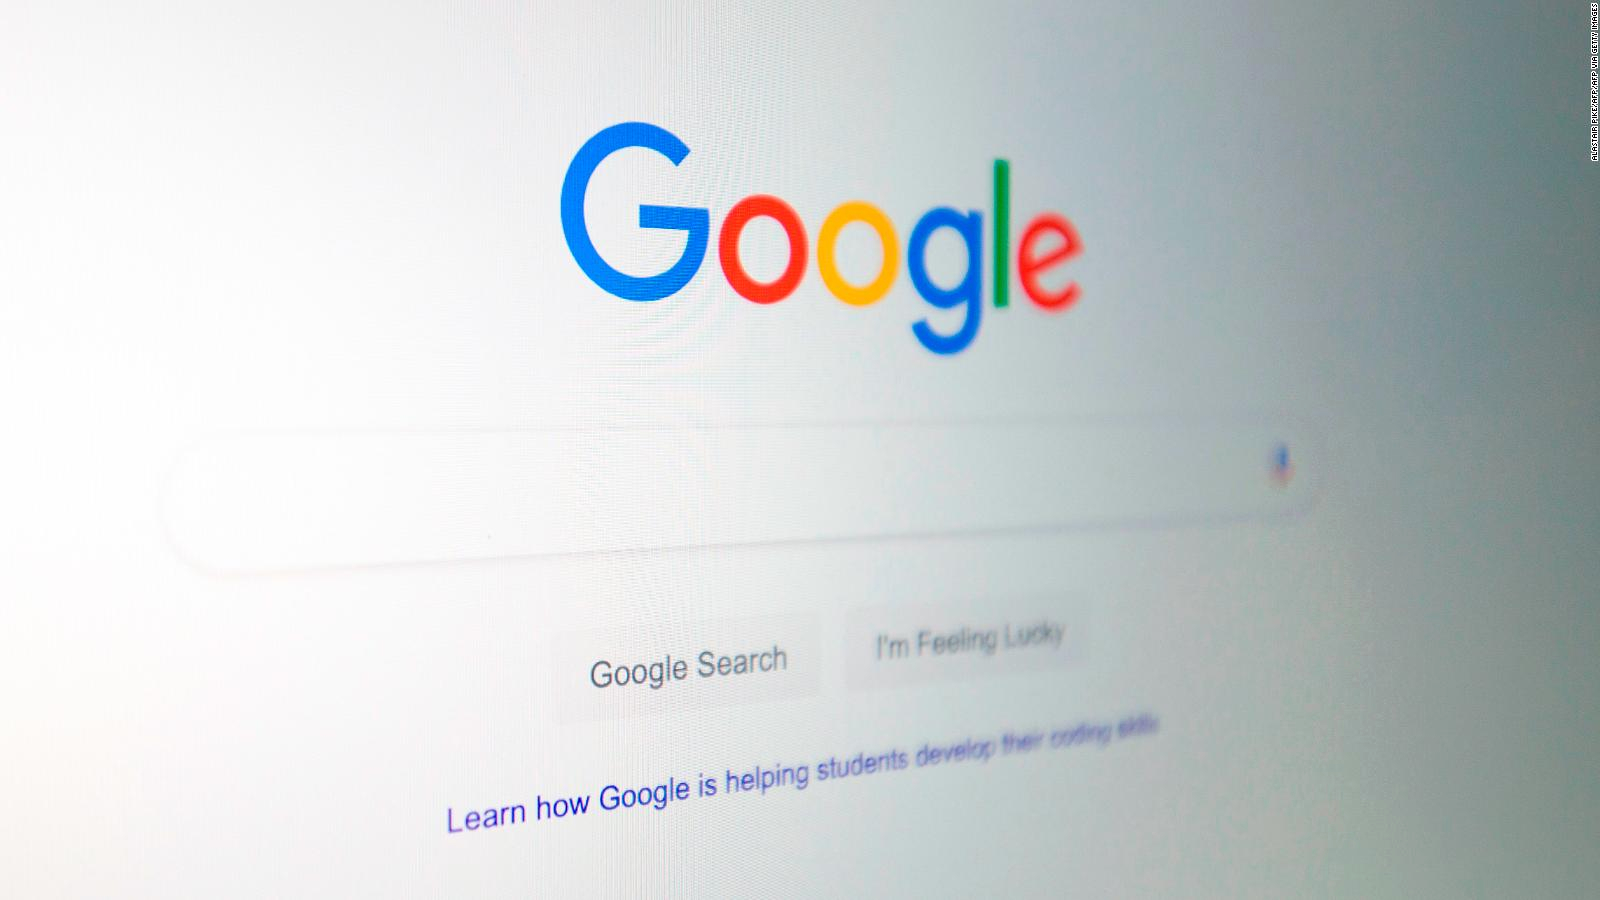 Tribunal multa a Google por mostrar resultados de búsqueda prohibidos